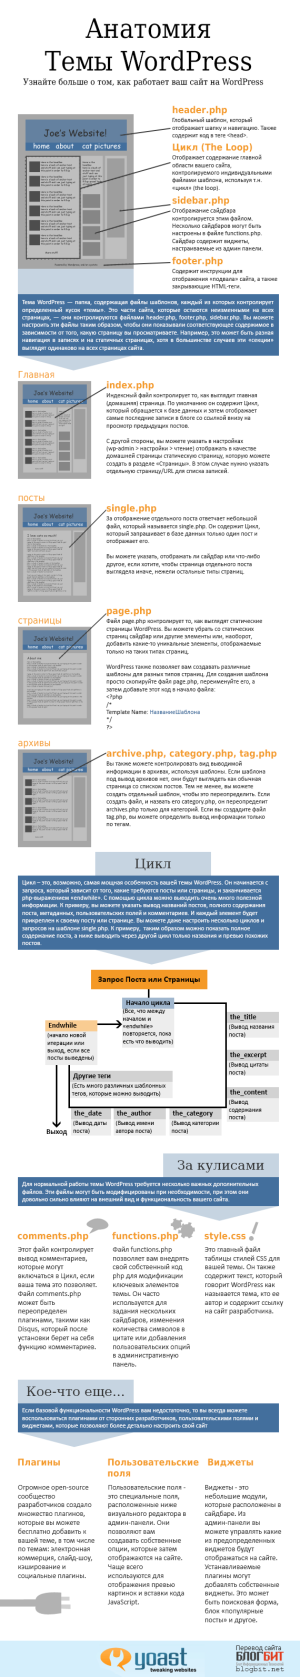 Анатомия темы WordPress - инфографика